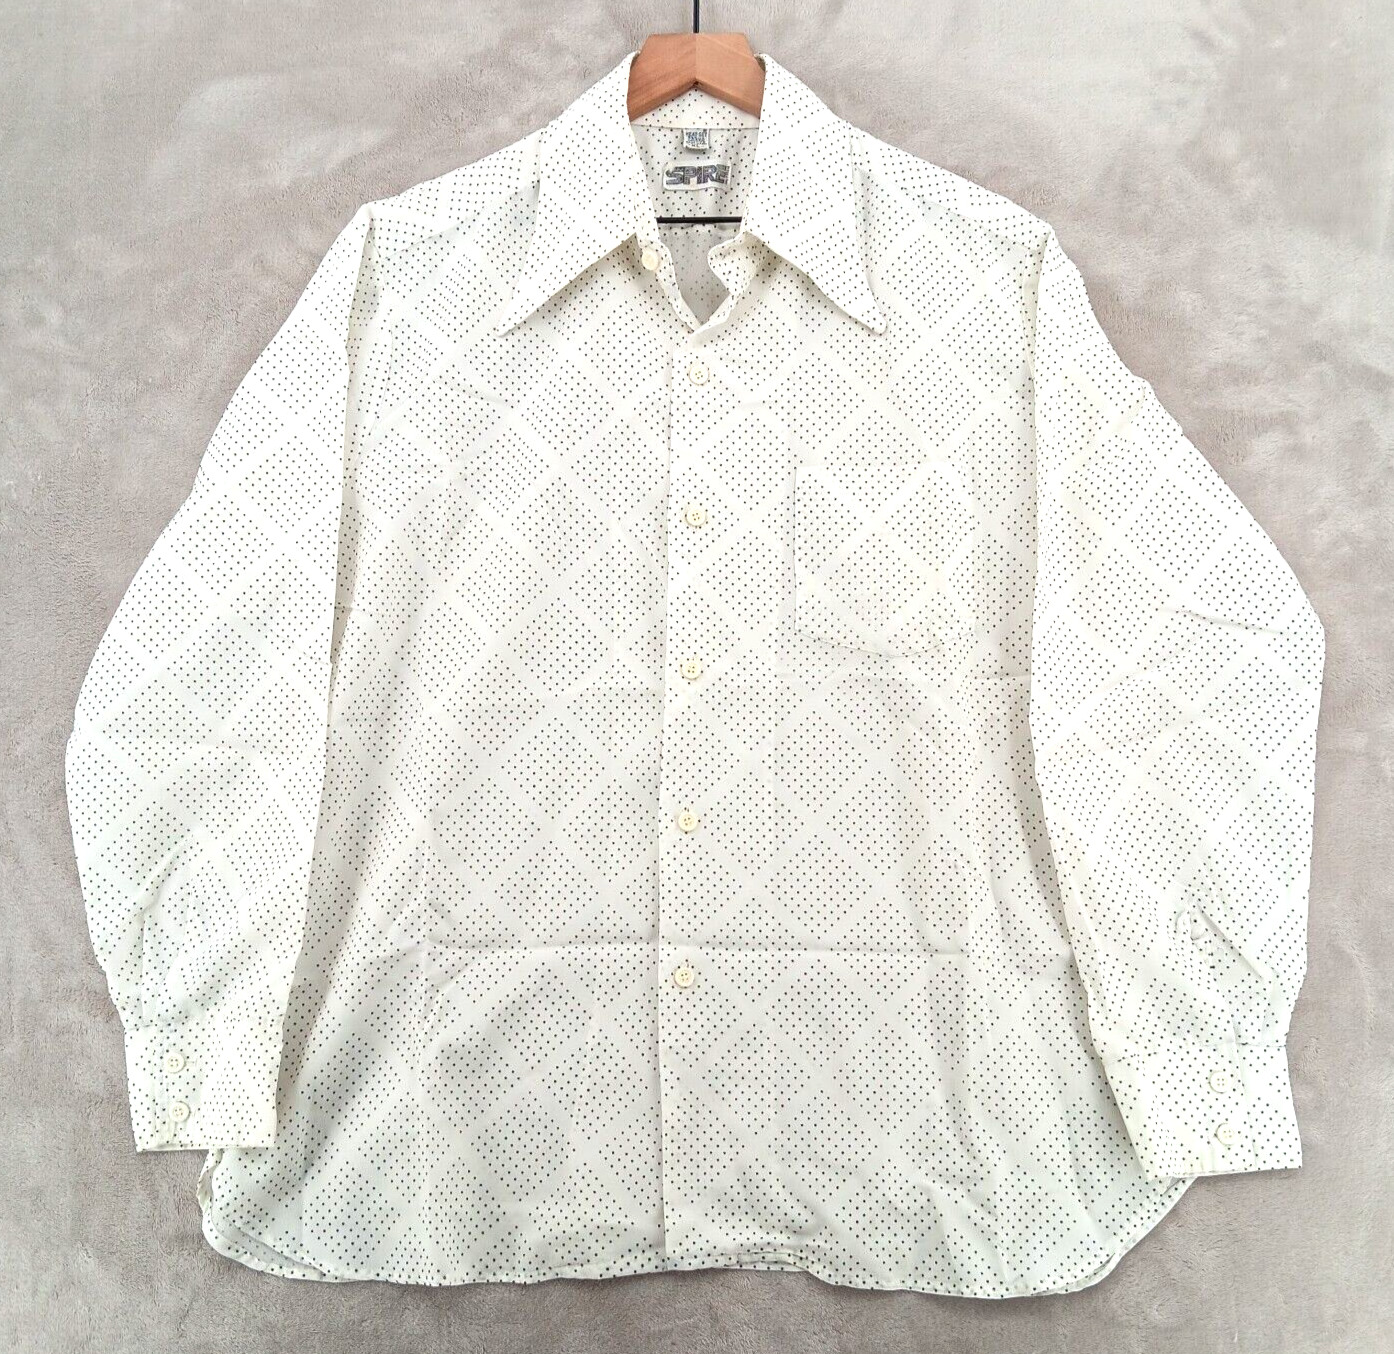 Spire California Disco Shirt XL White Polka Dot Dagger Collar Very Thin Vintage